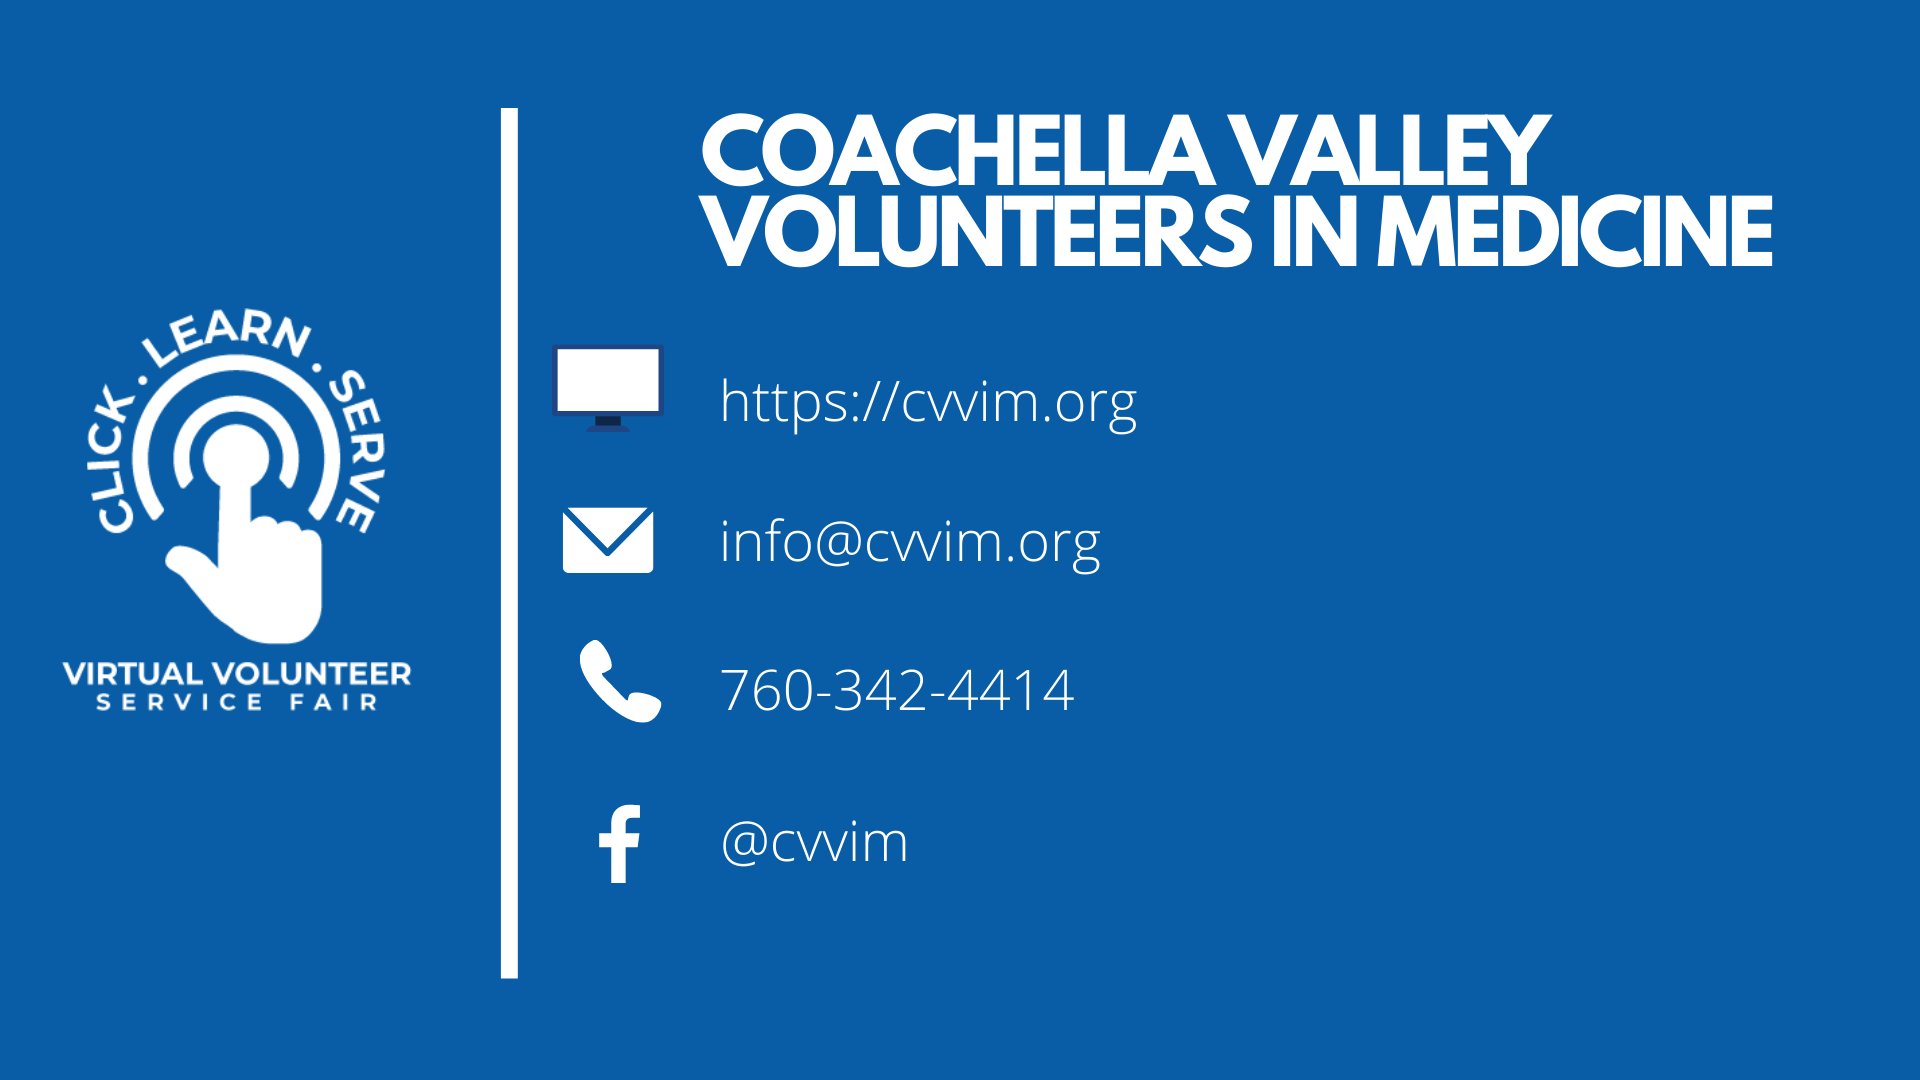 CV Volunteers in Medicine nonprofit video for the Virtual Volunteer Service Fair.